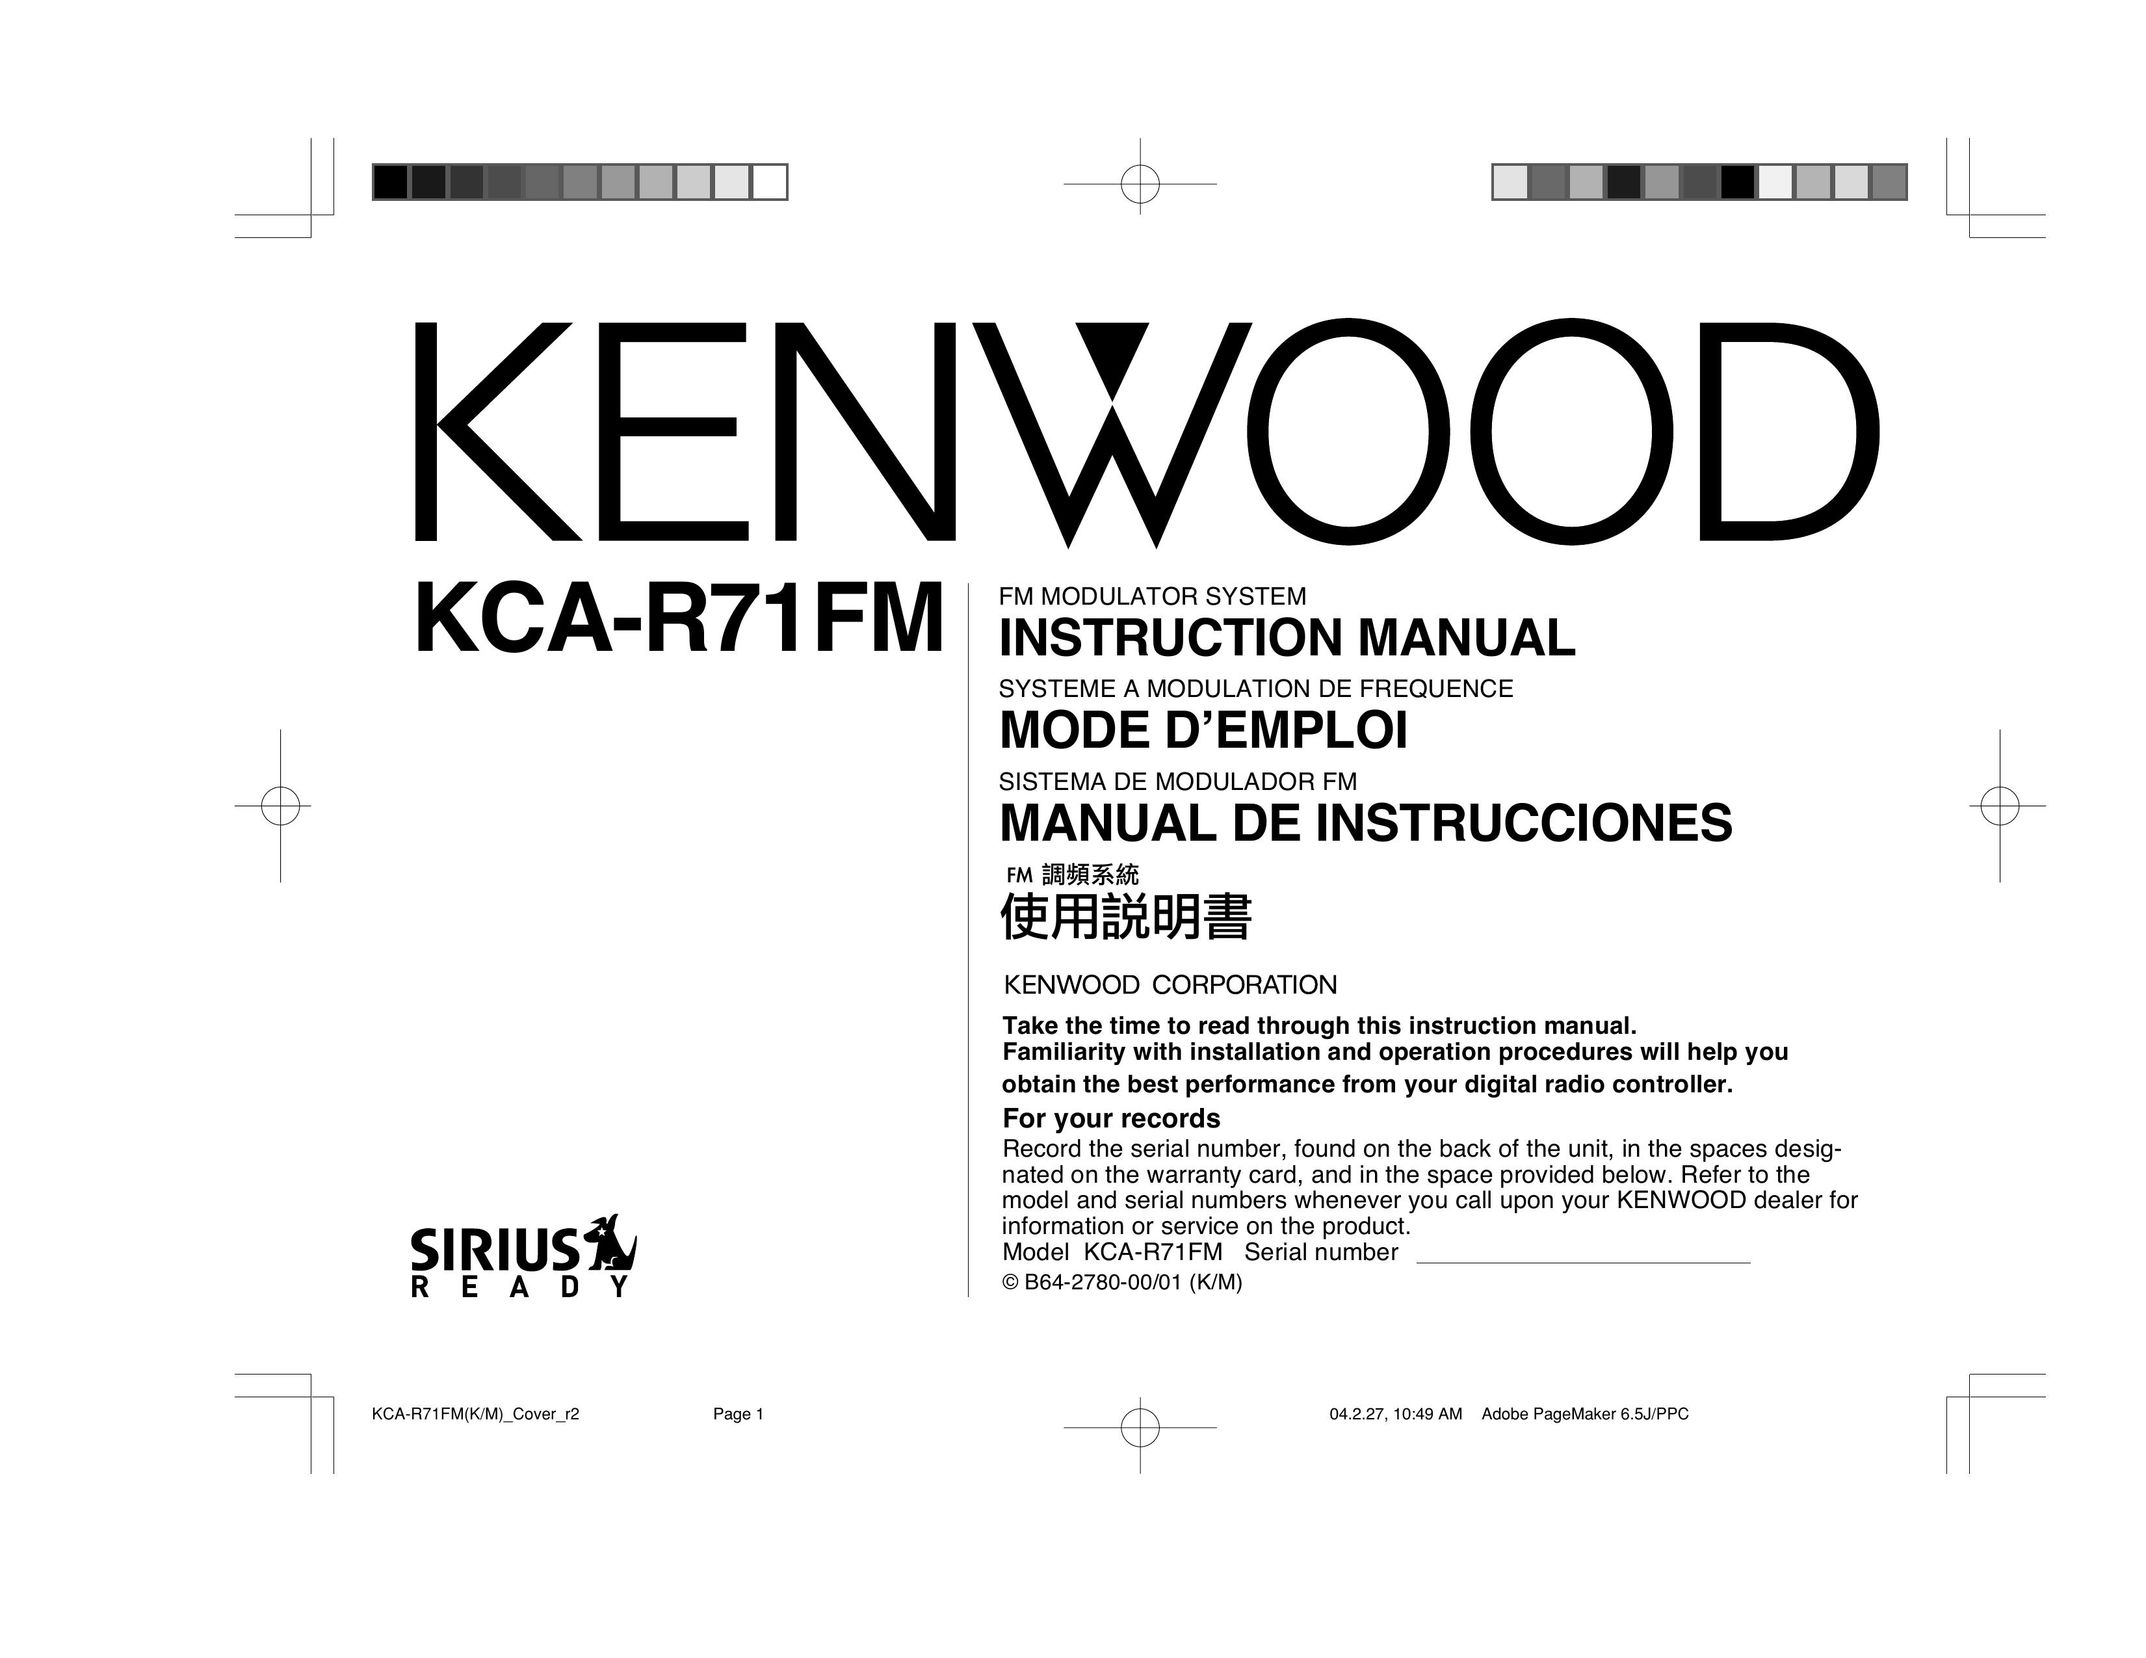 Kenwood KCA-R71FM Car Satellite Radio System User Manual